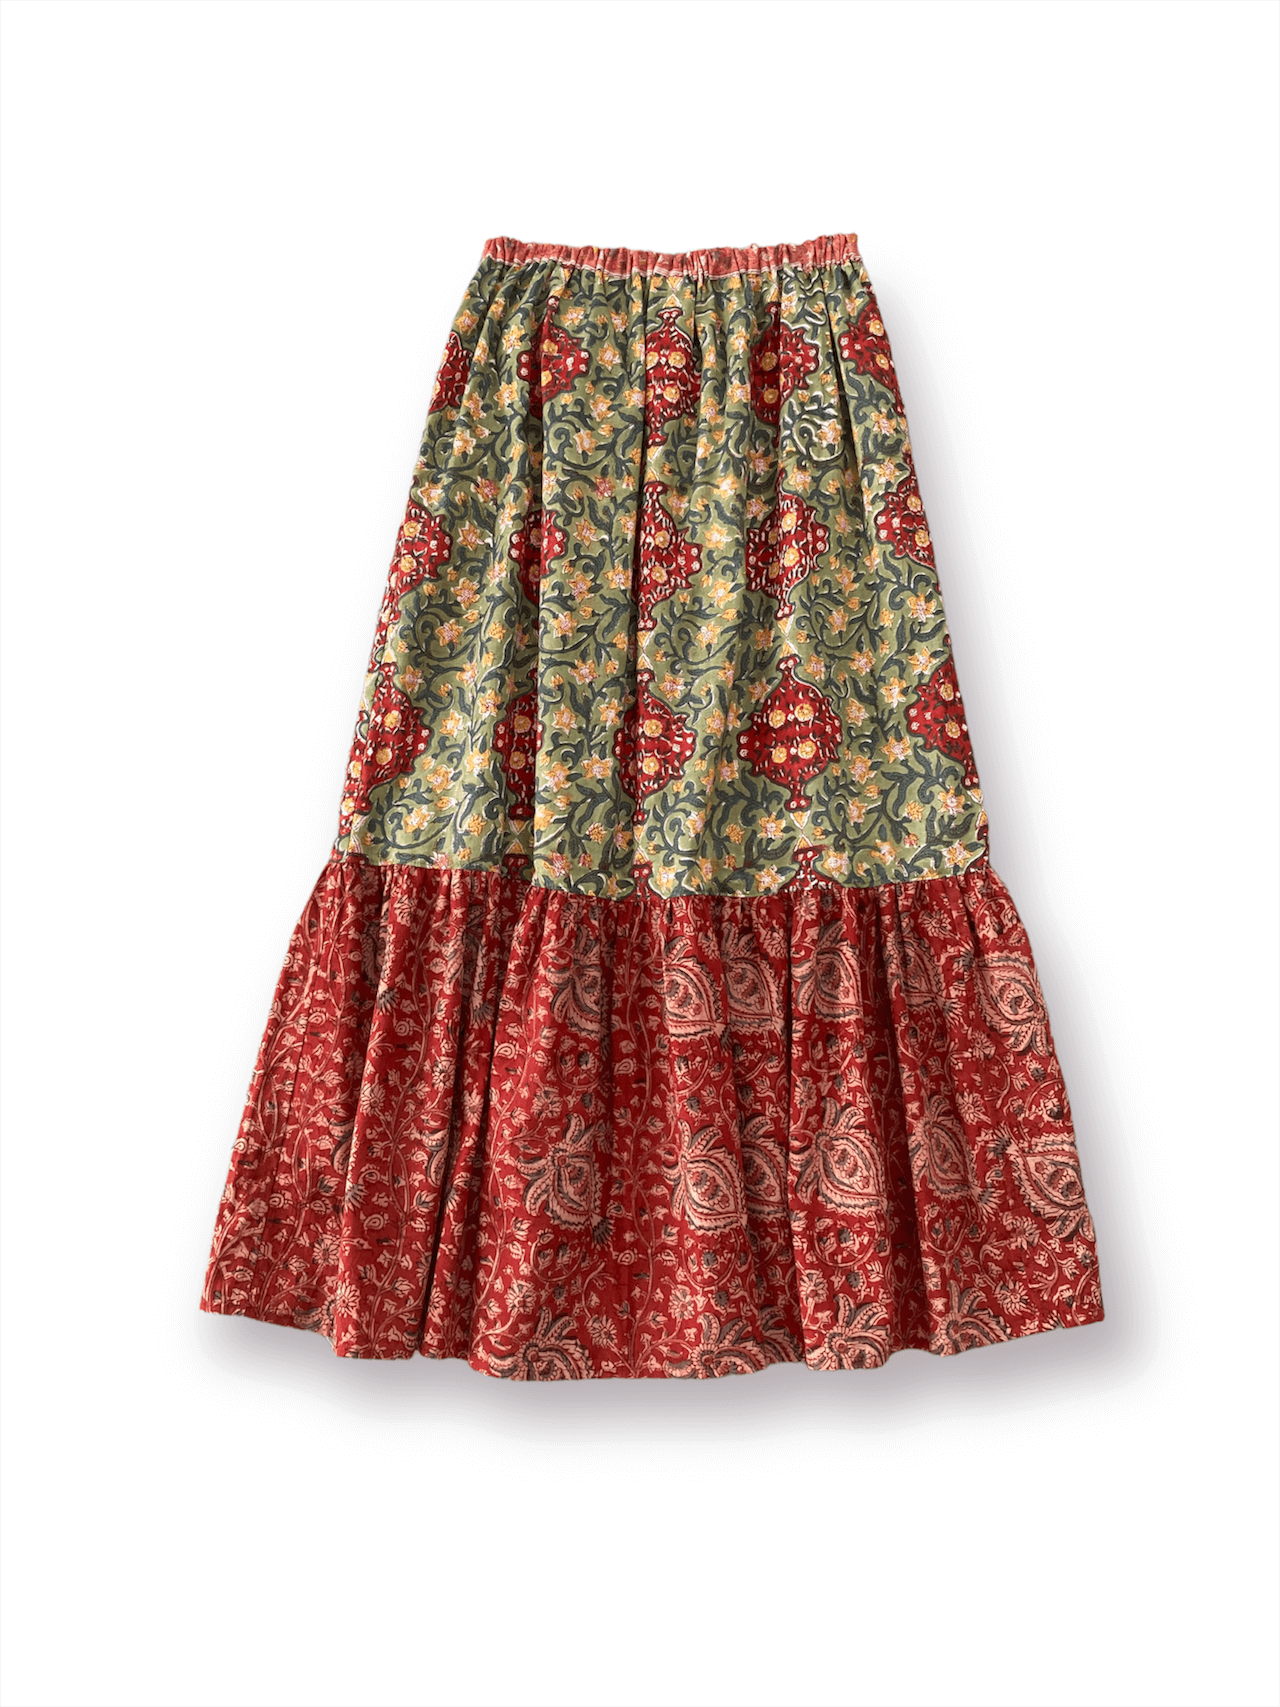 【custom order】Hand Block Print 2 Color Frill Gathered Long Skirt #Anja